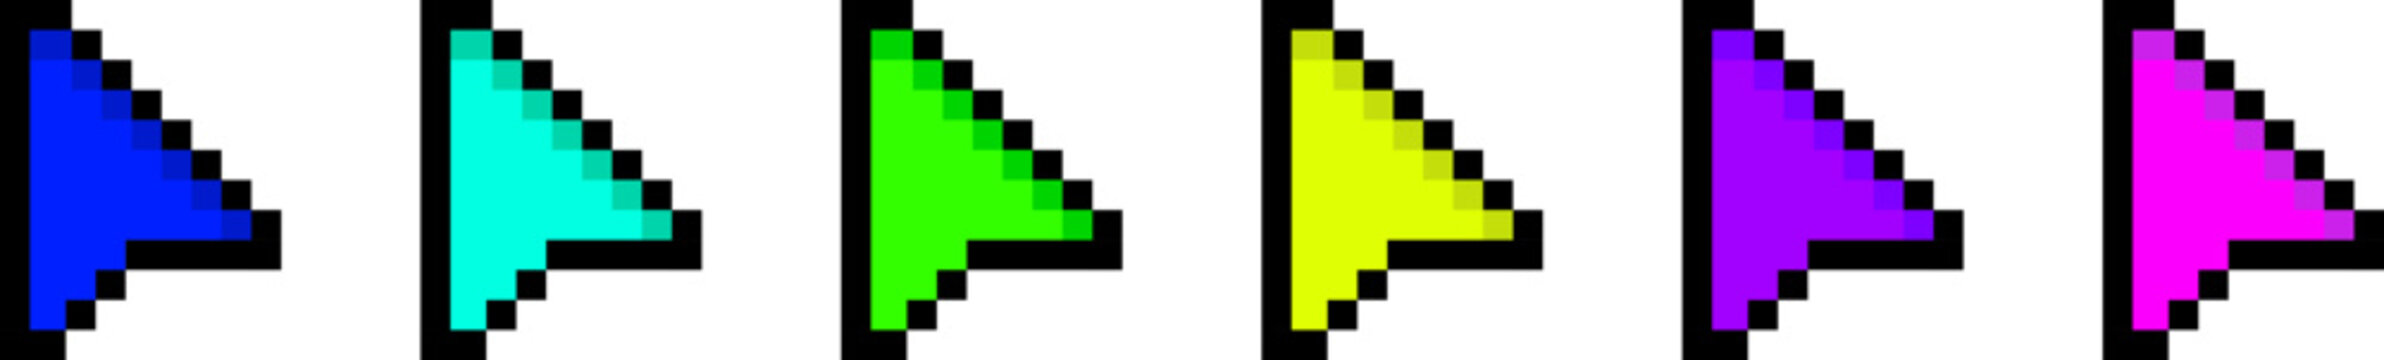 Pixel art gaming pointer neon cursor svg vector set